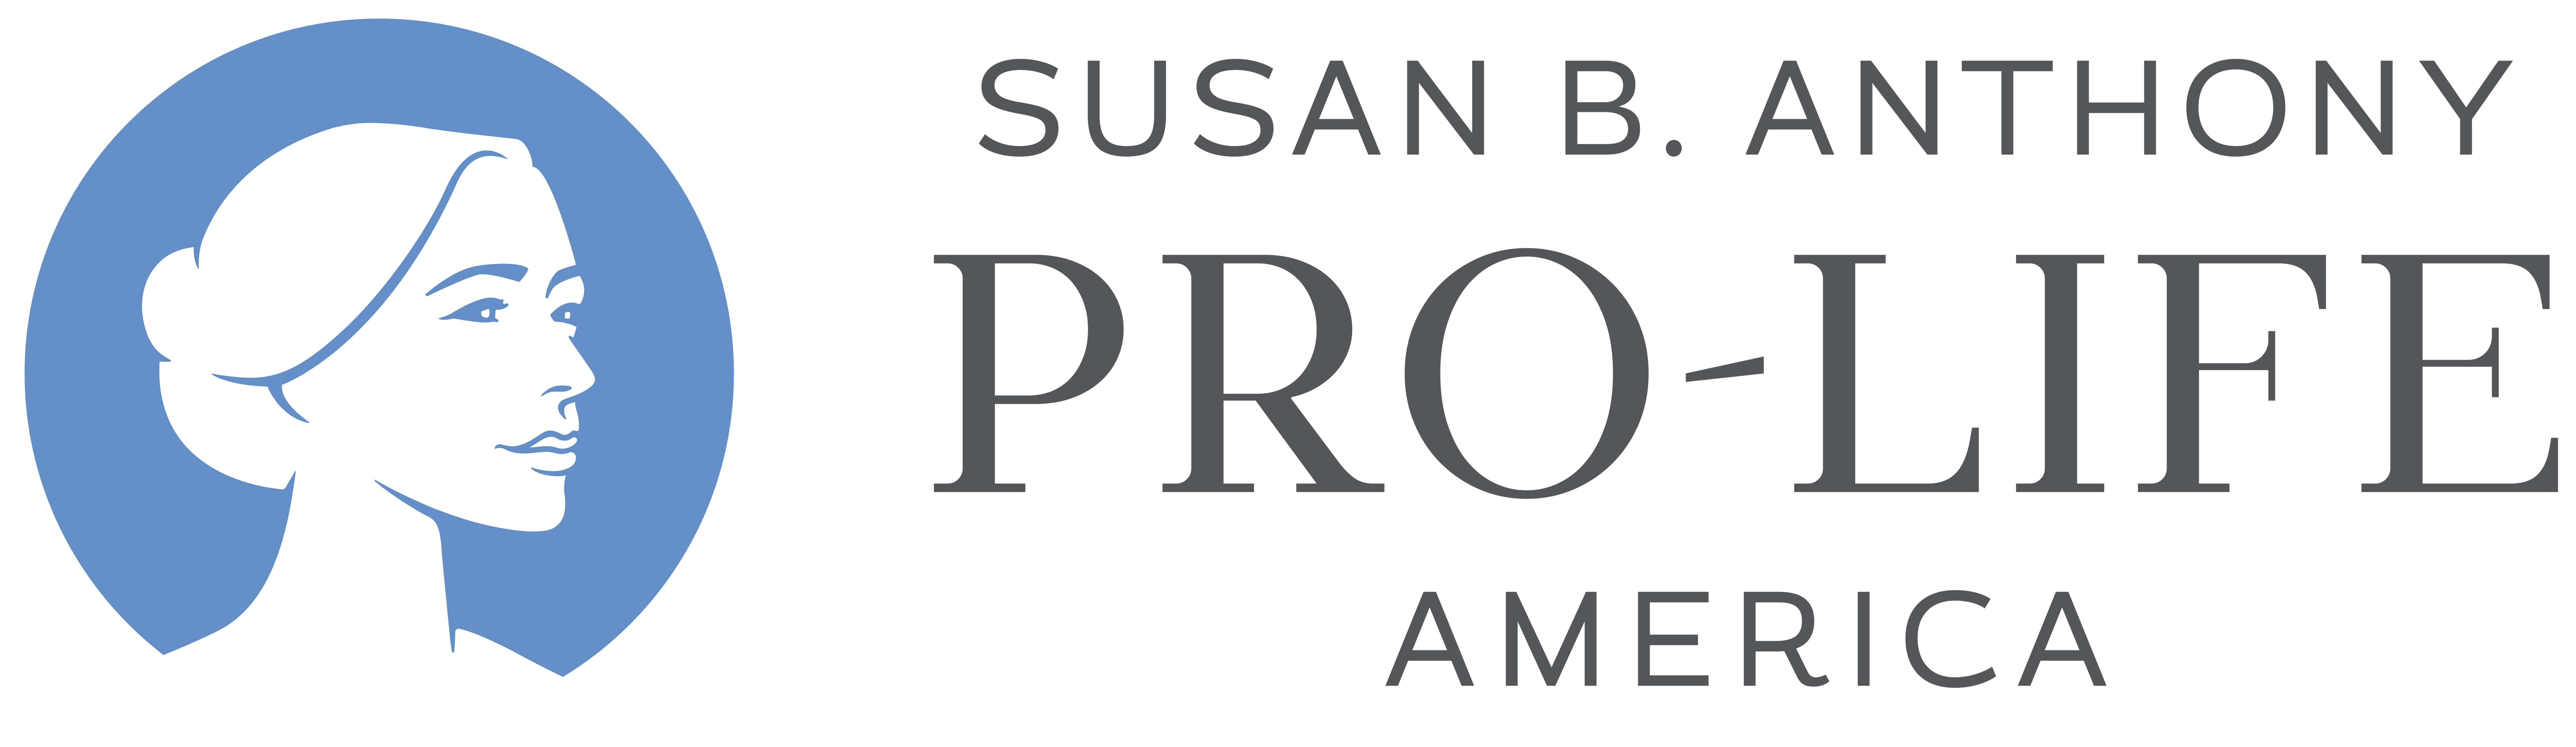 Susan B Anthony pro-life America logo